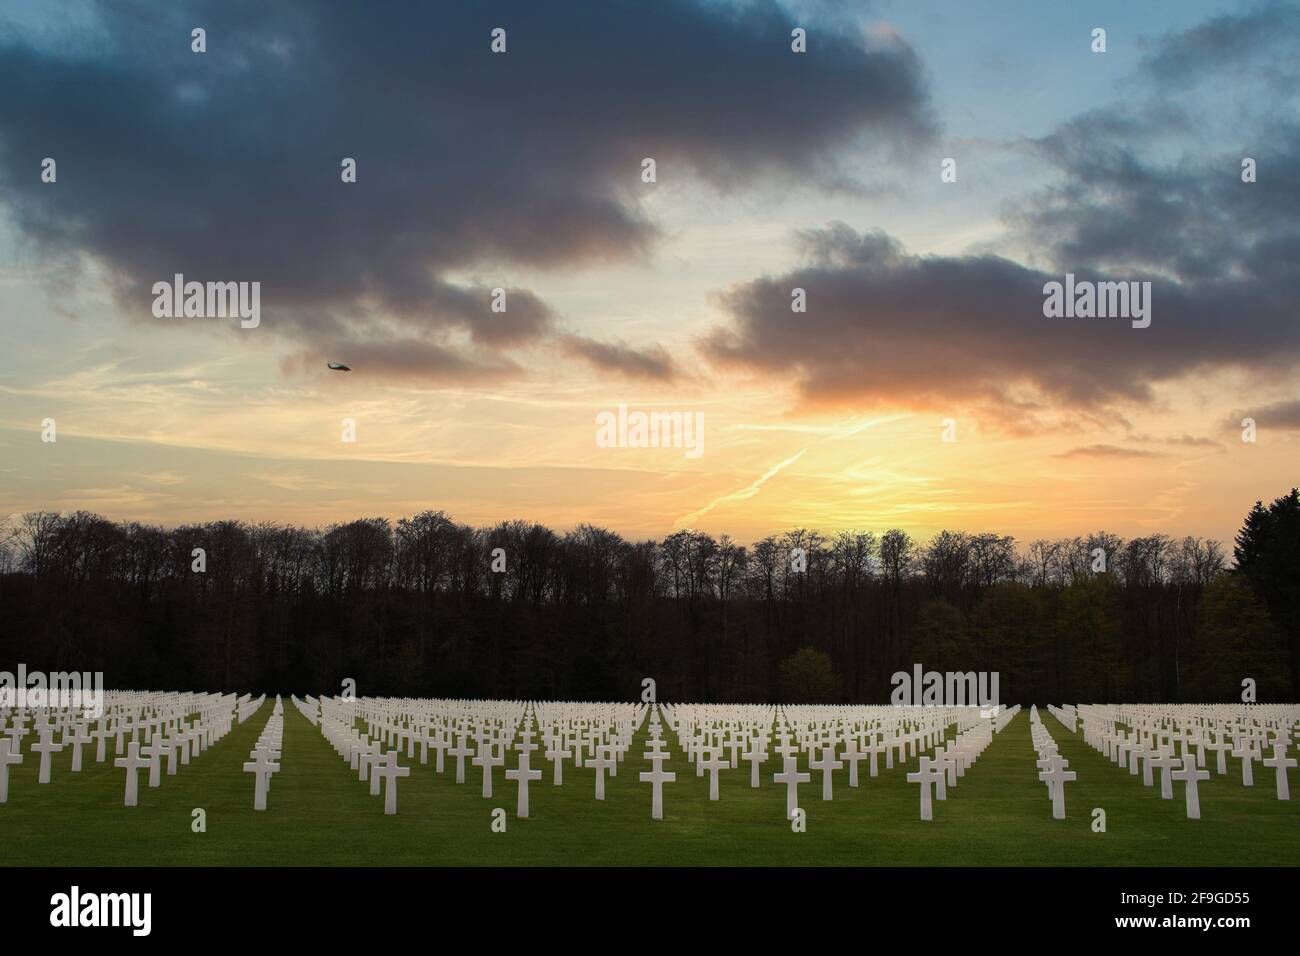 Amerikanischer Soldatenfriedhof Stockfoto